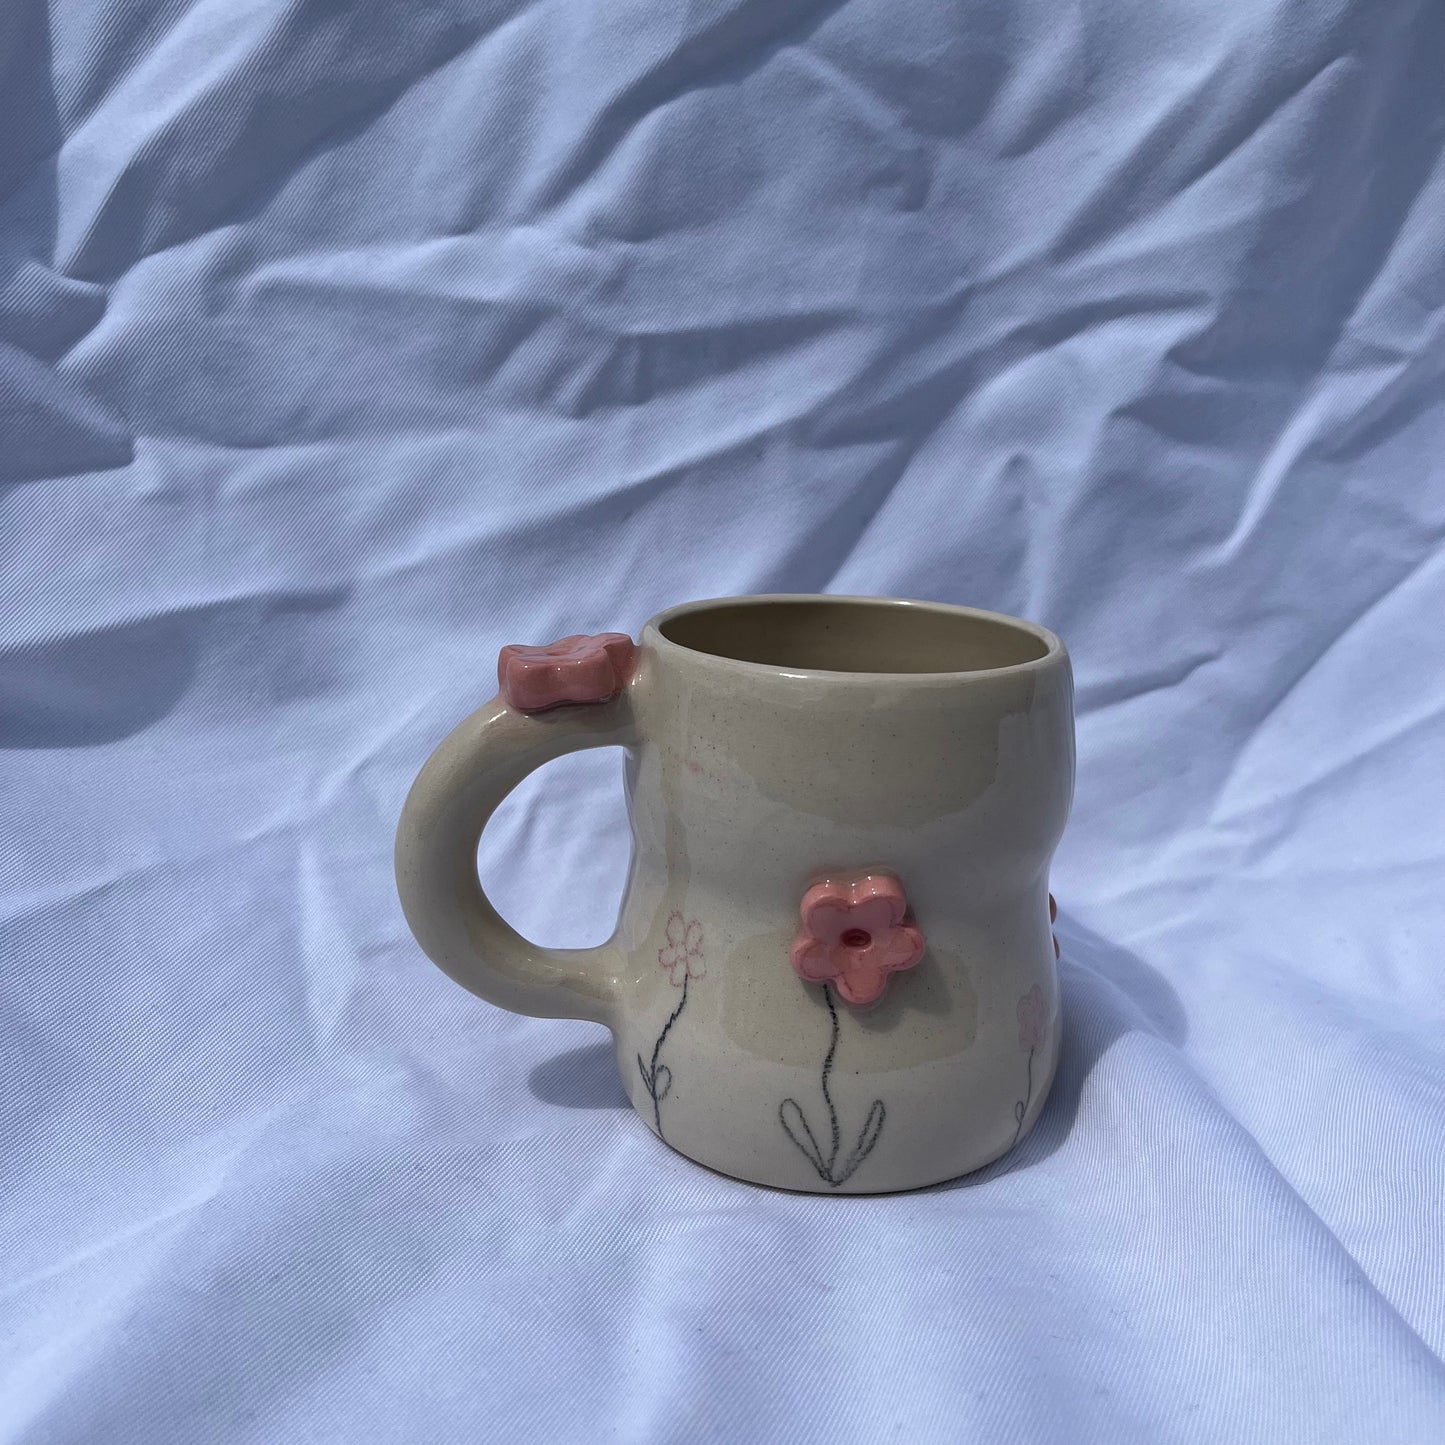 Imperfect flower mug